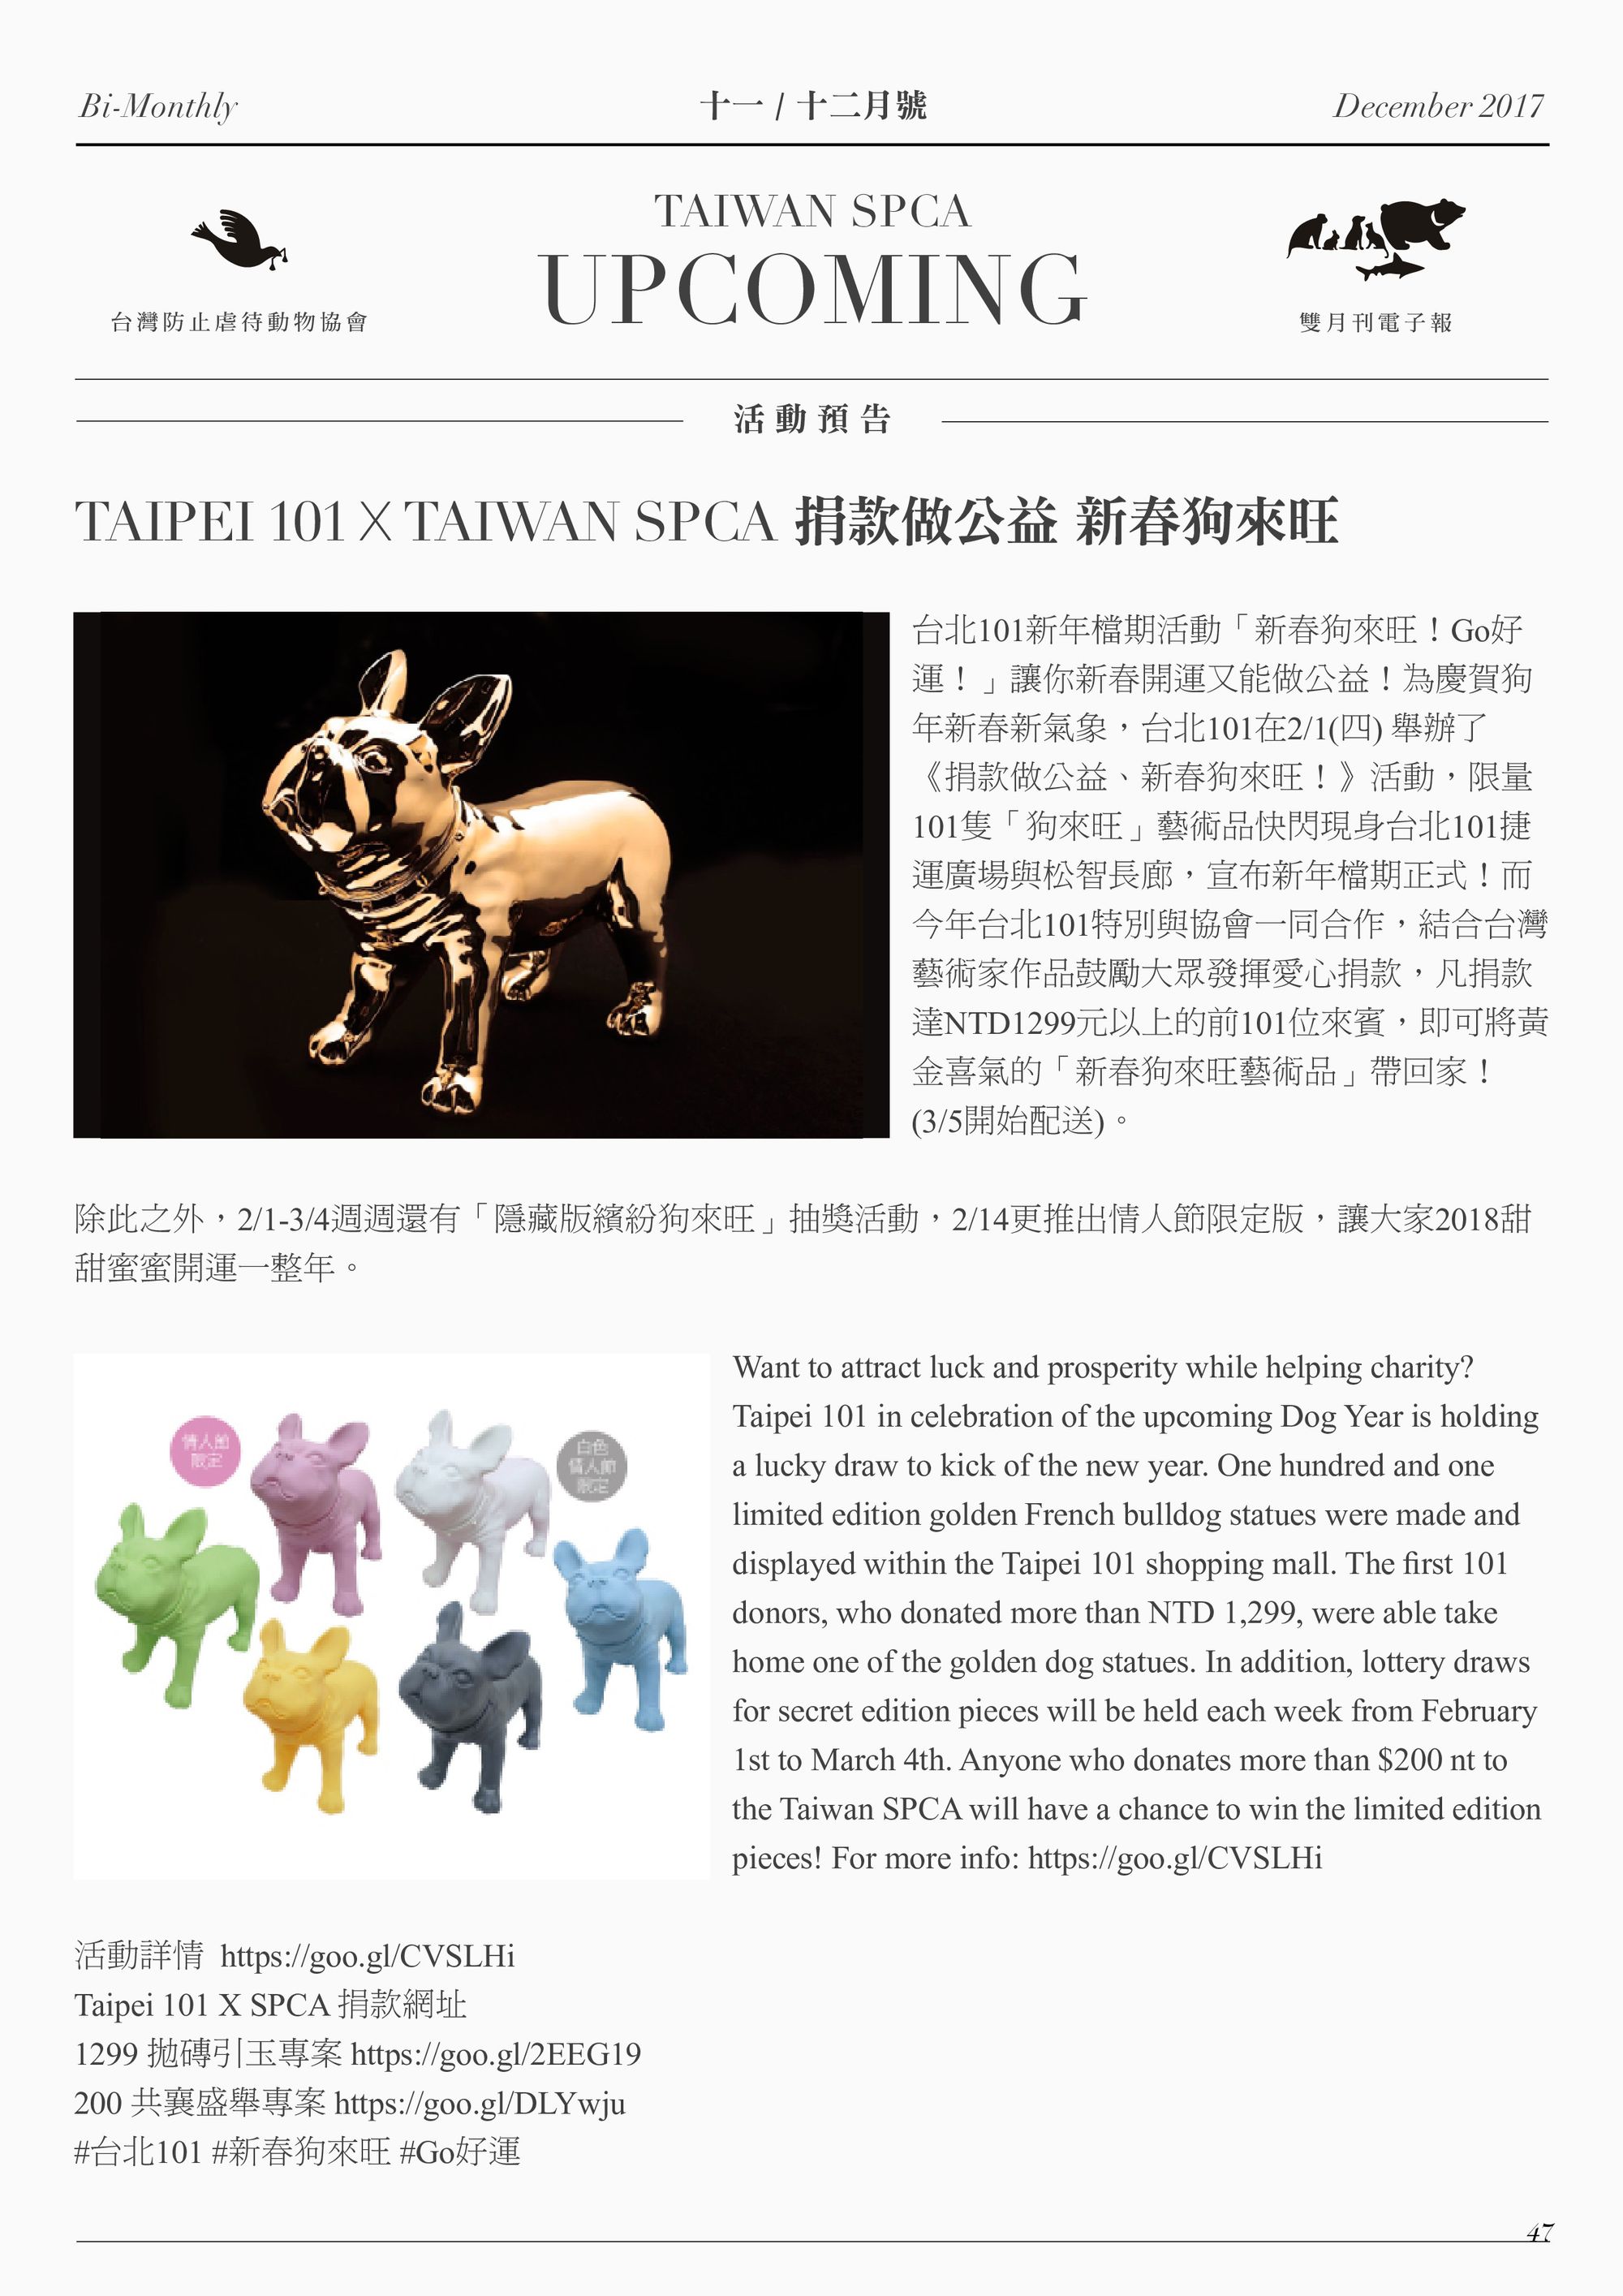 TAIPEI 101 X TAIWAN SPCA 捐款做公益 新春狗來旺